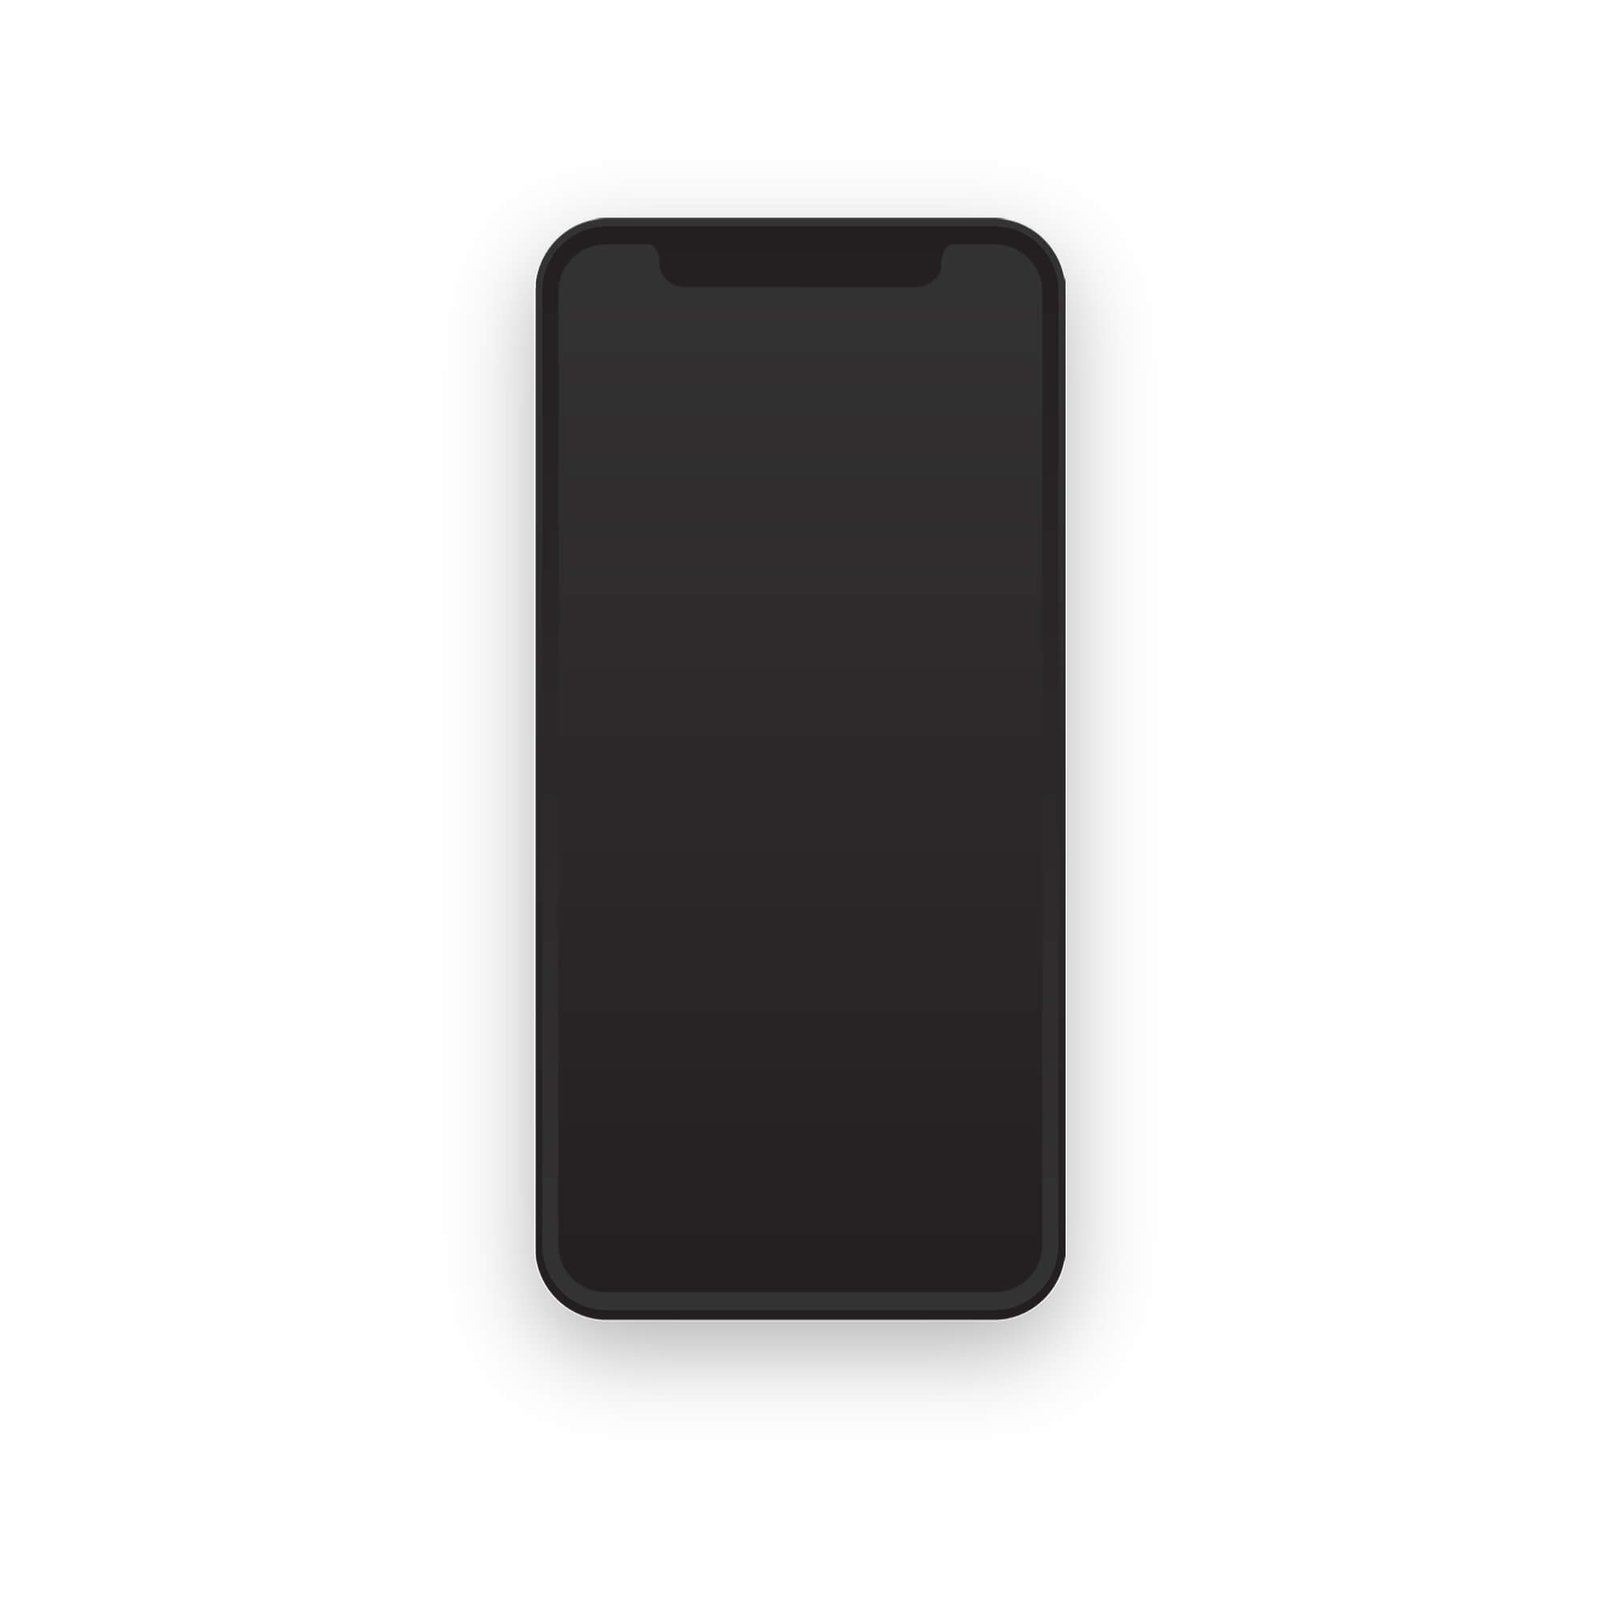 Blank Free Flat iPhone Mockup PSD Template